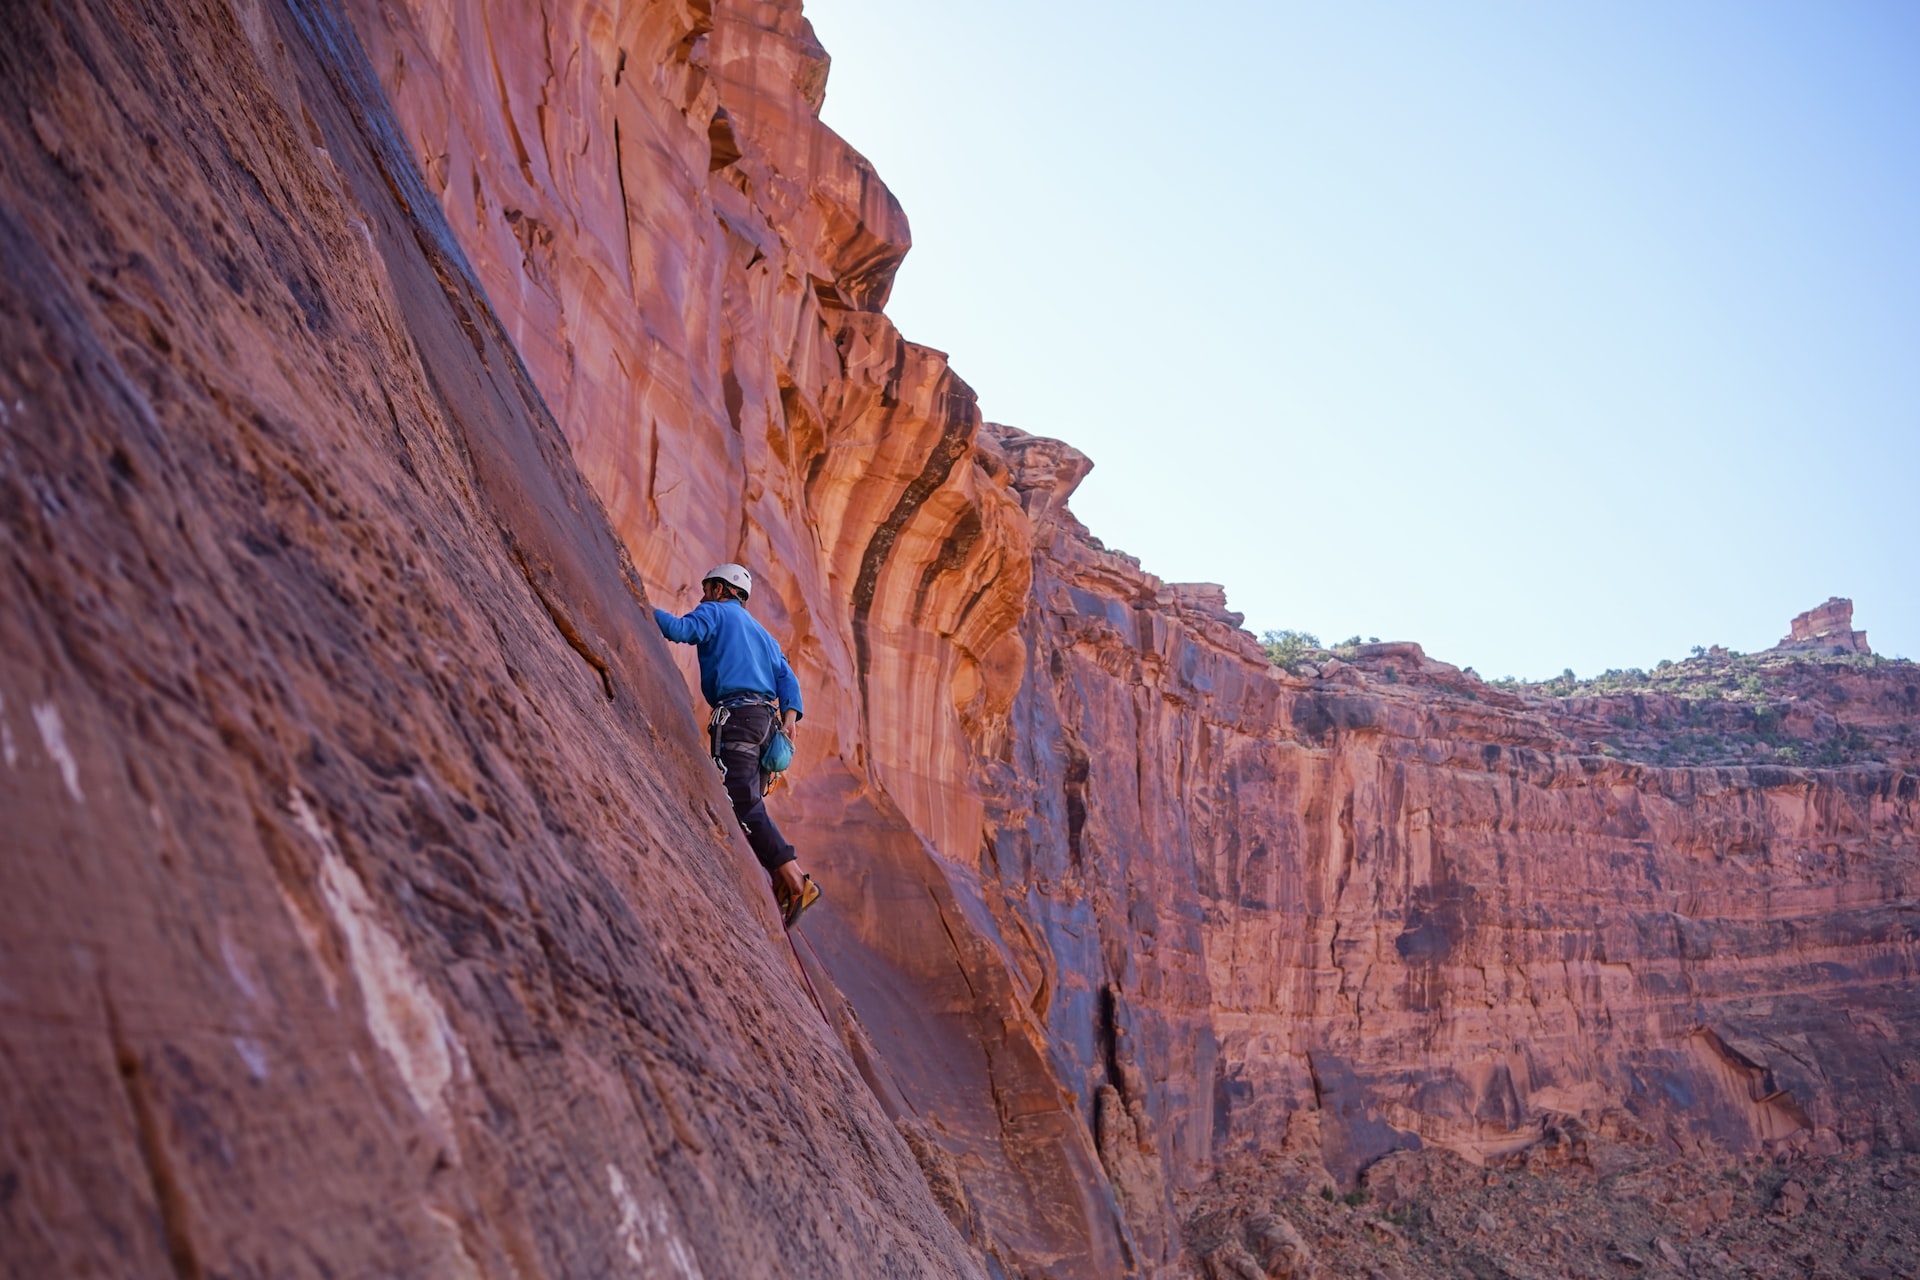 A person climbs a sheer cliff.